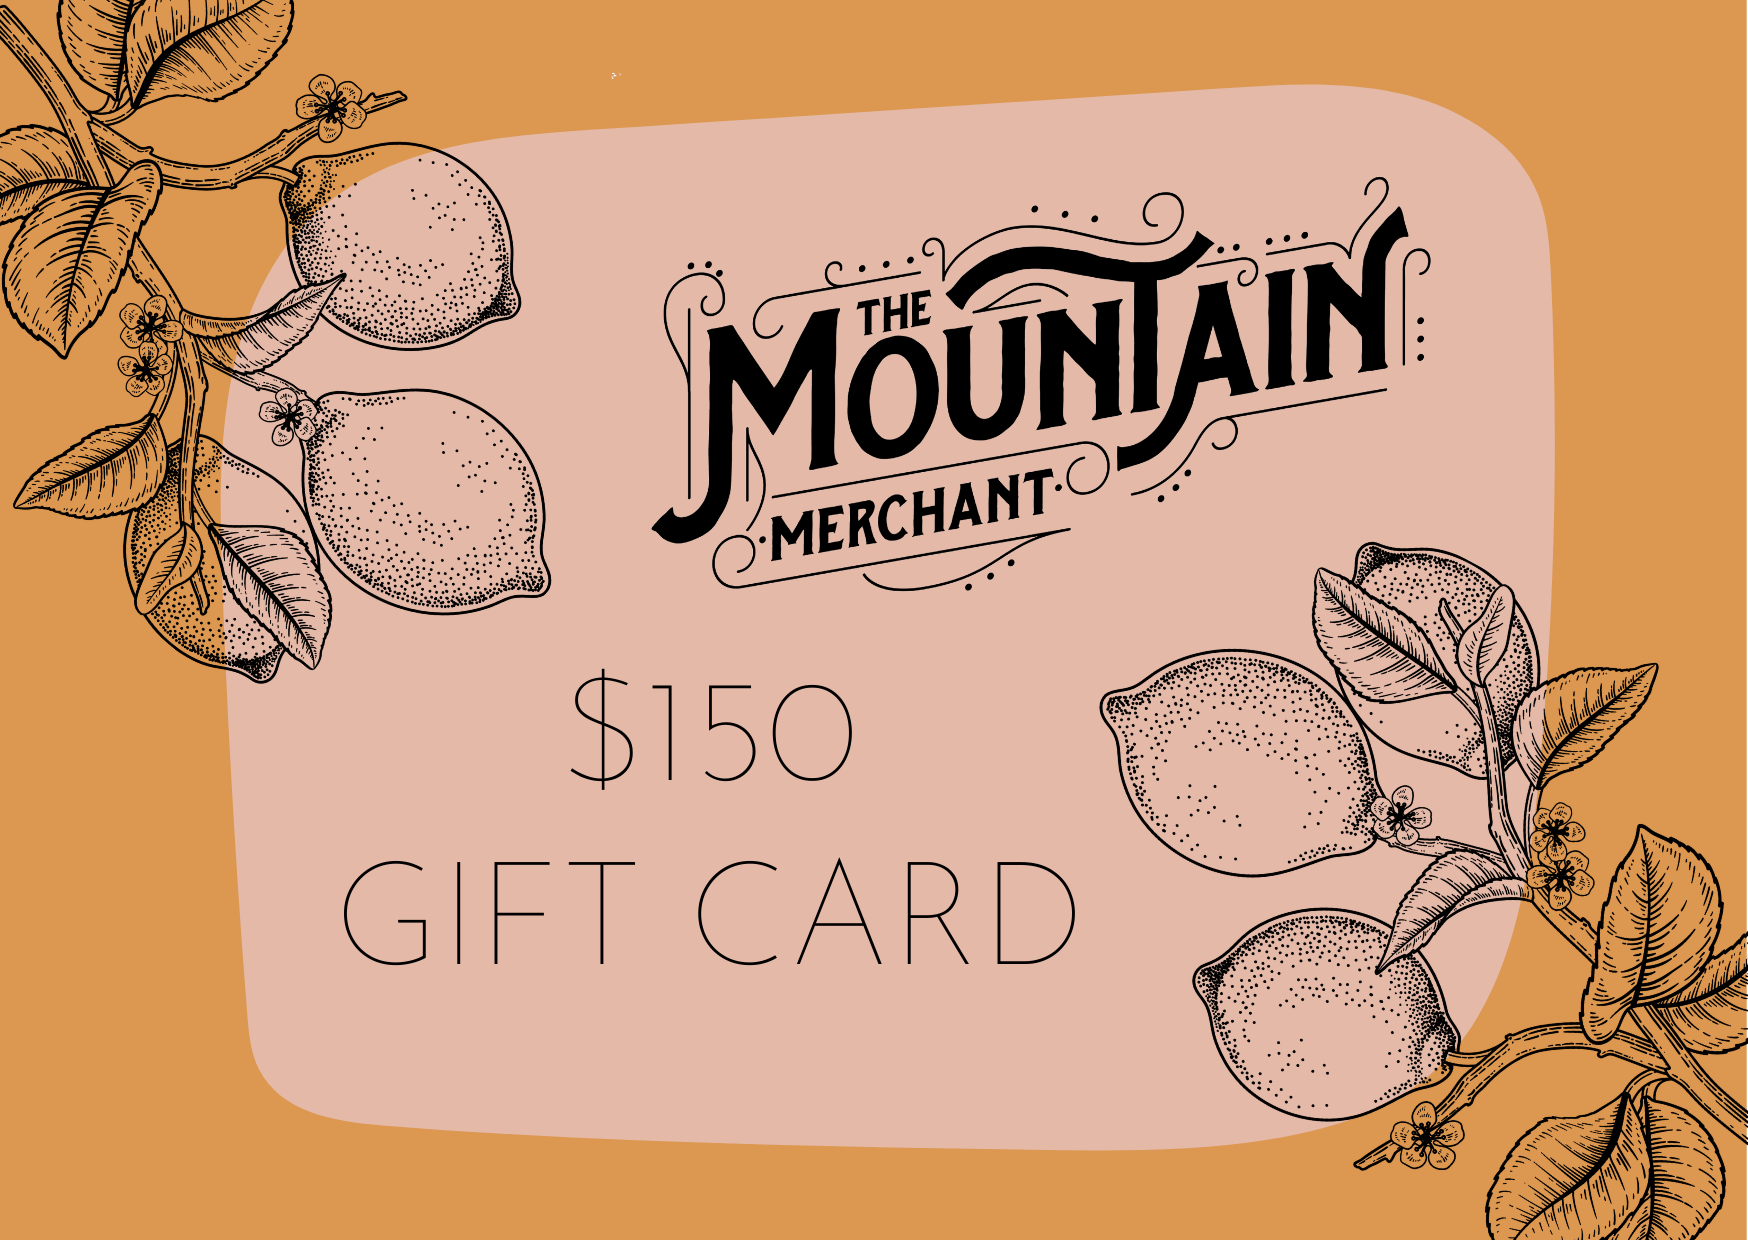 The Mountain Merchant - Gift Card $150 -The Mountain Merchant -The Mountain Merchant